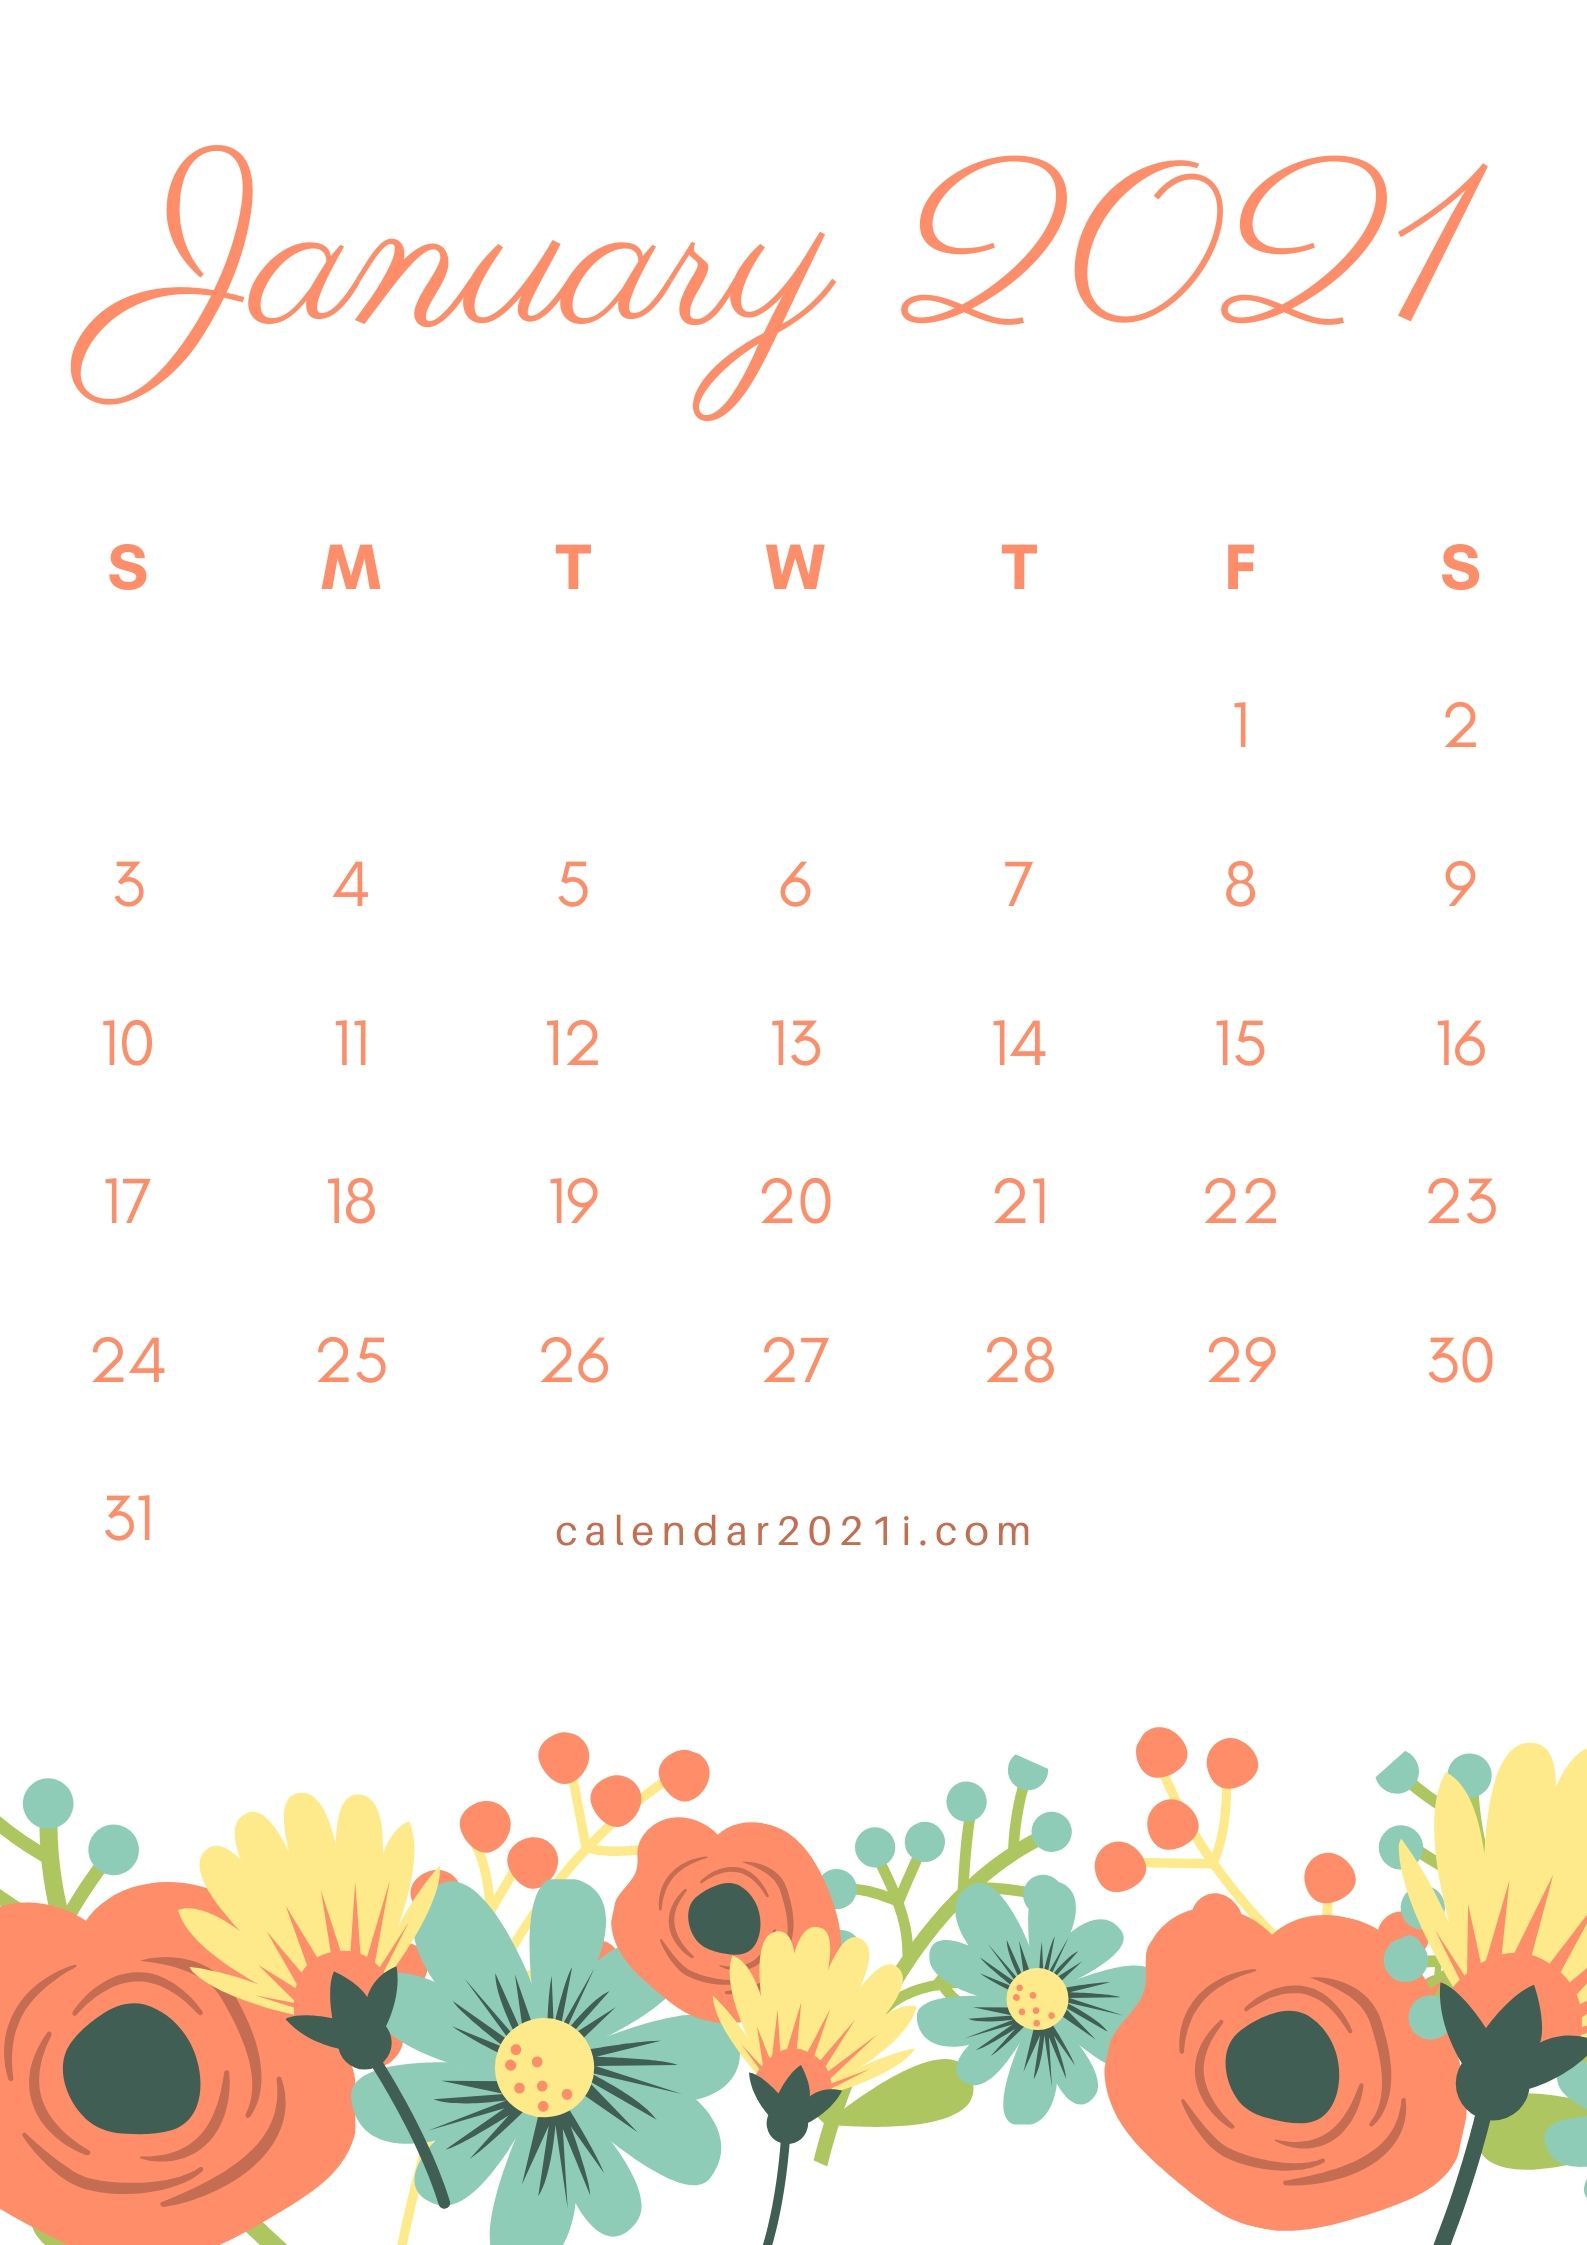 January 2021 Calendar Wallpaper Pinterest Image ID 16